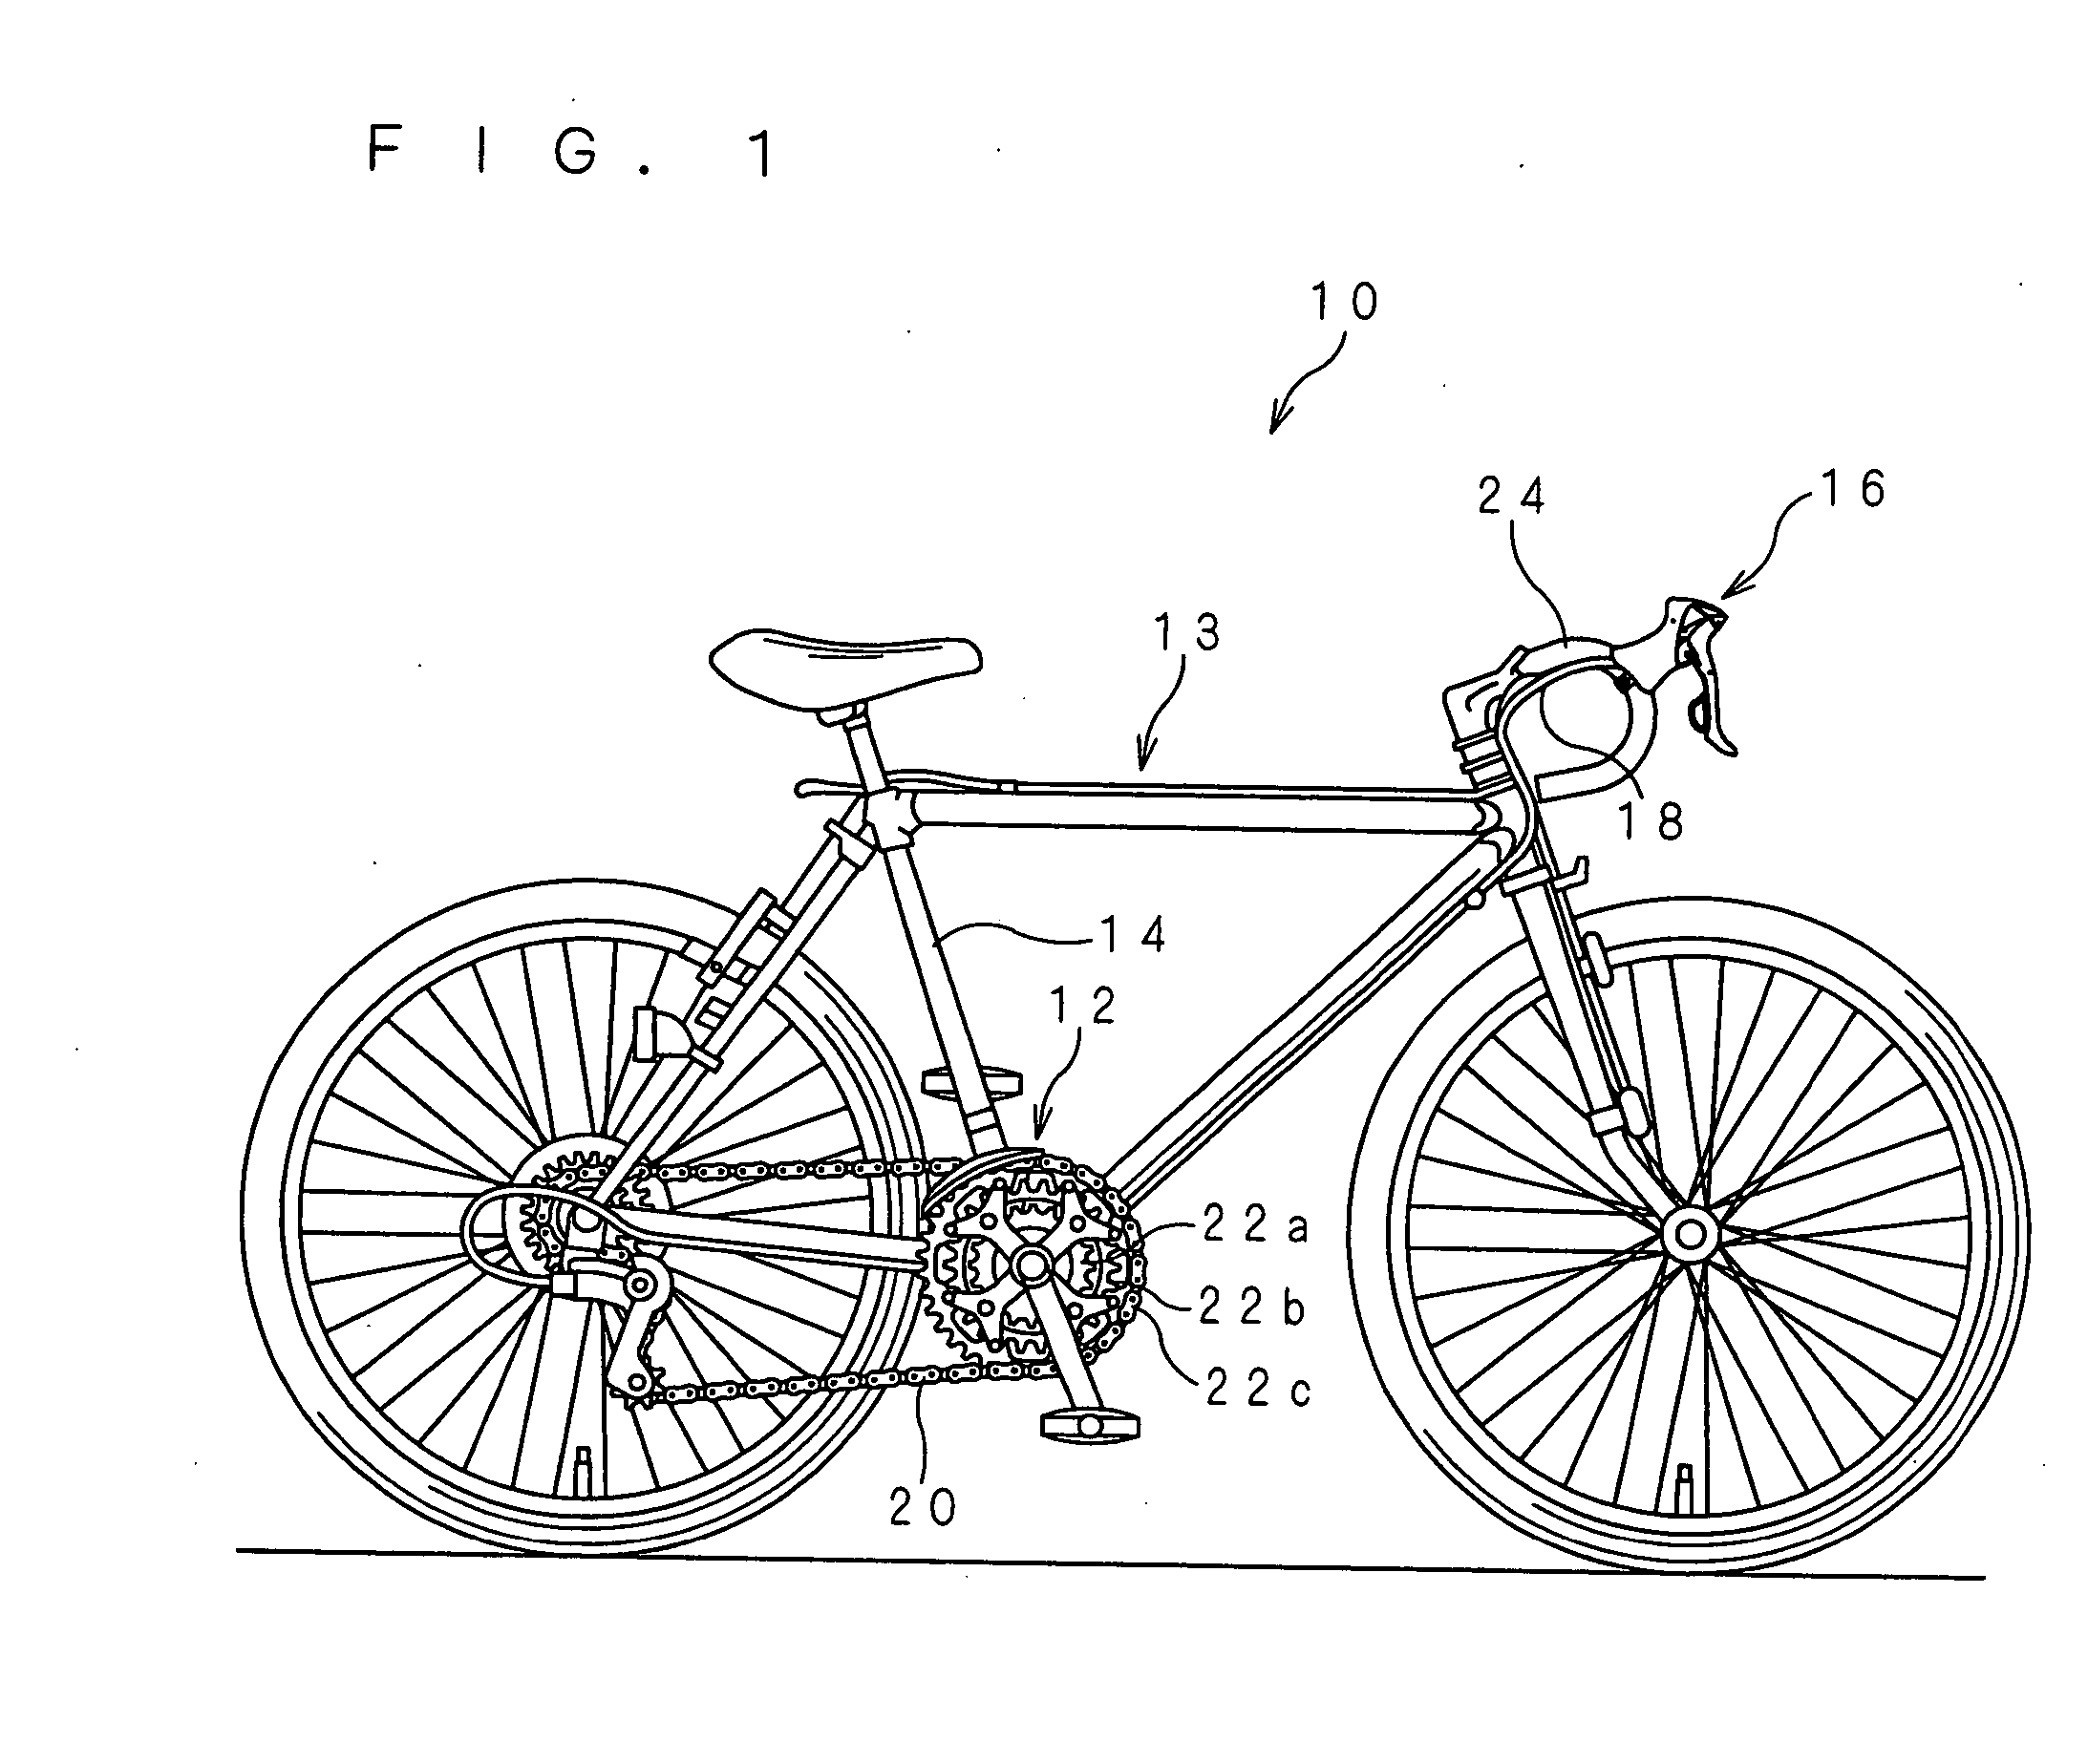 Bicycle front derailleur